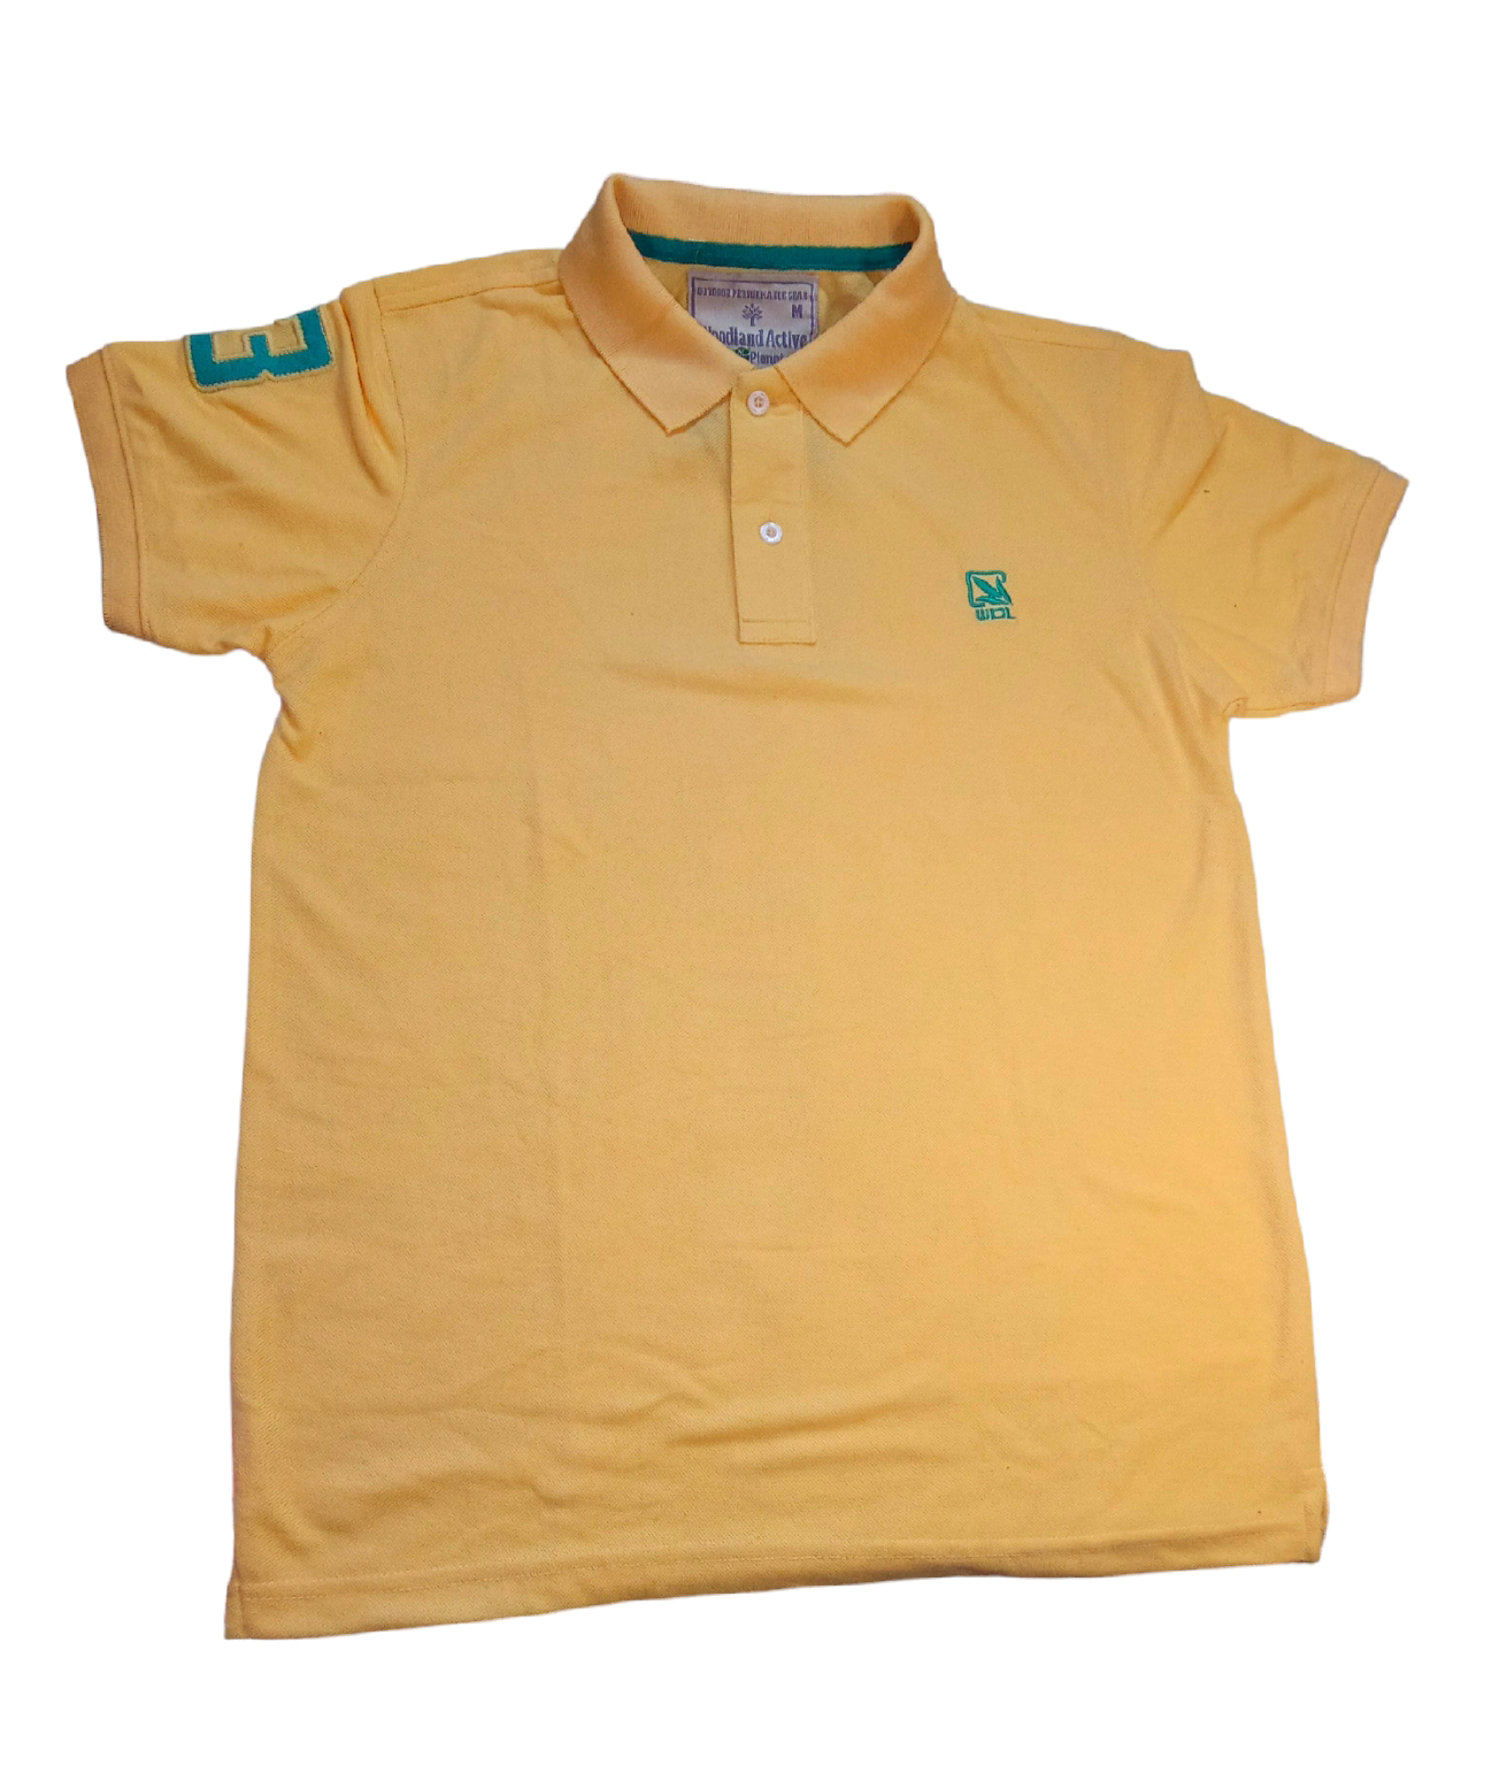 Wood Land Stylish T Shirt For Men's, Boy's  - Festival, M, T Shirt